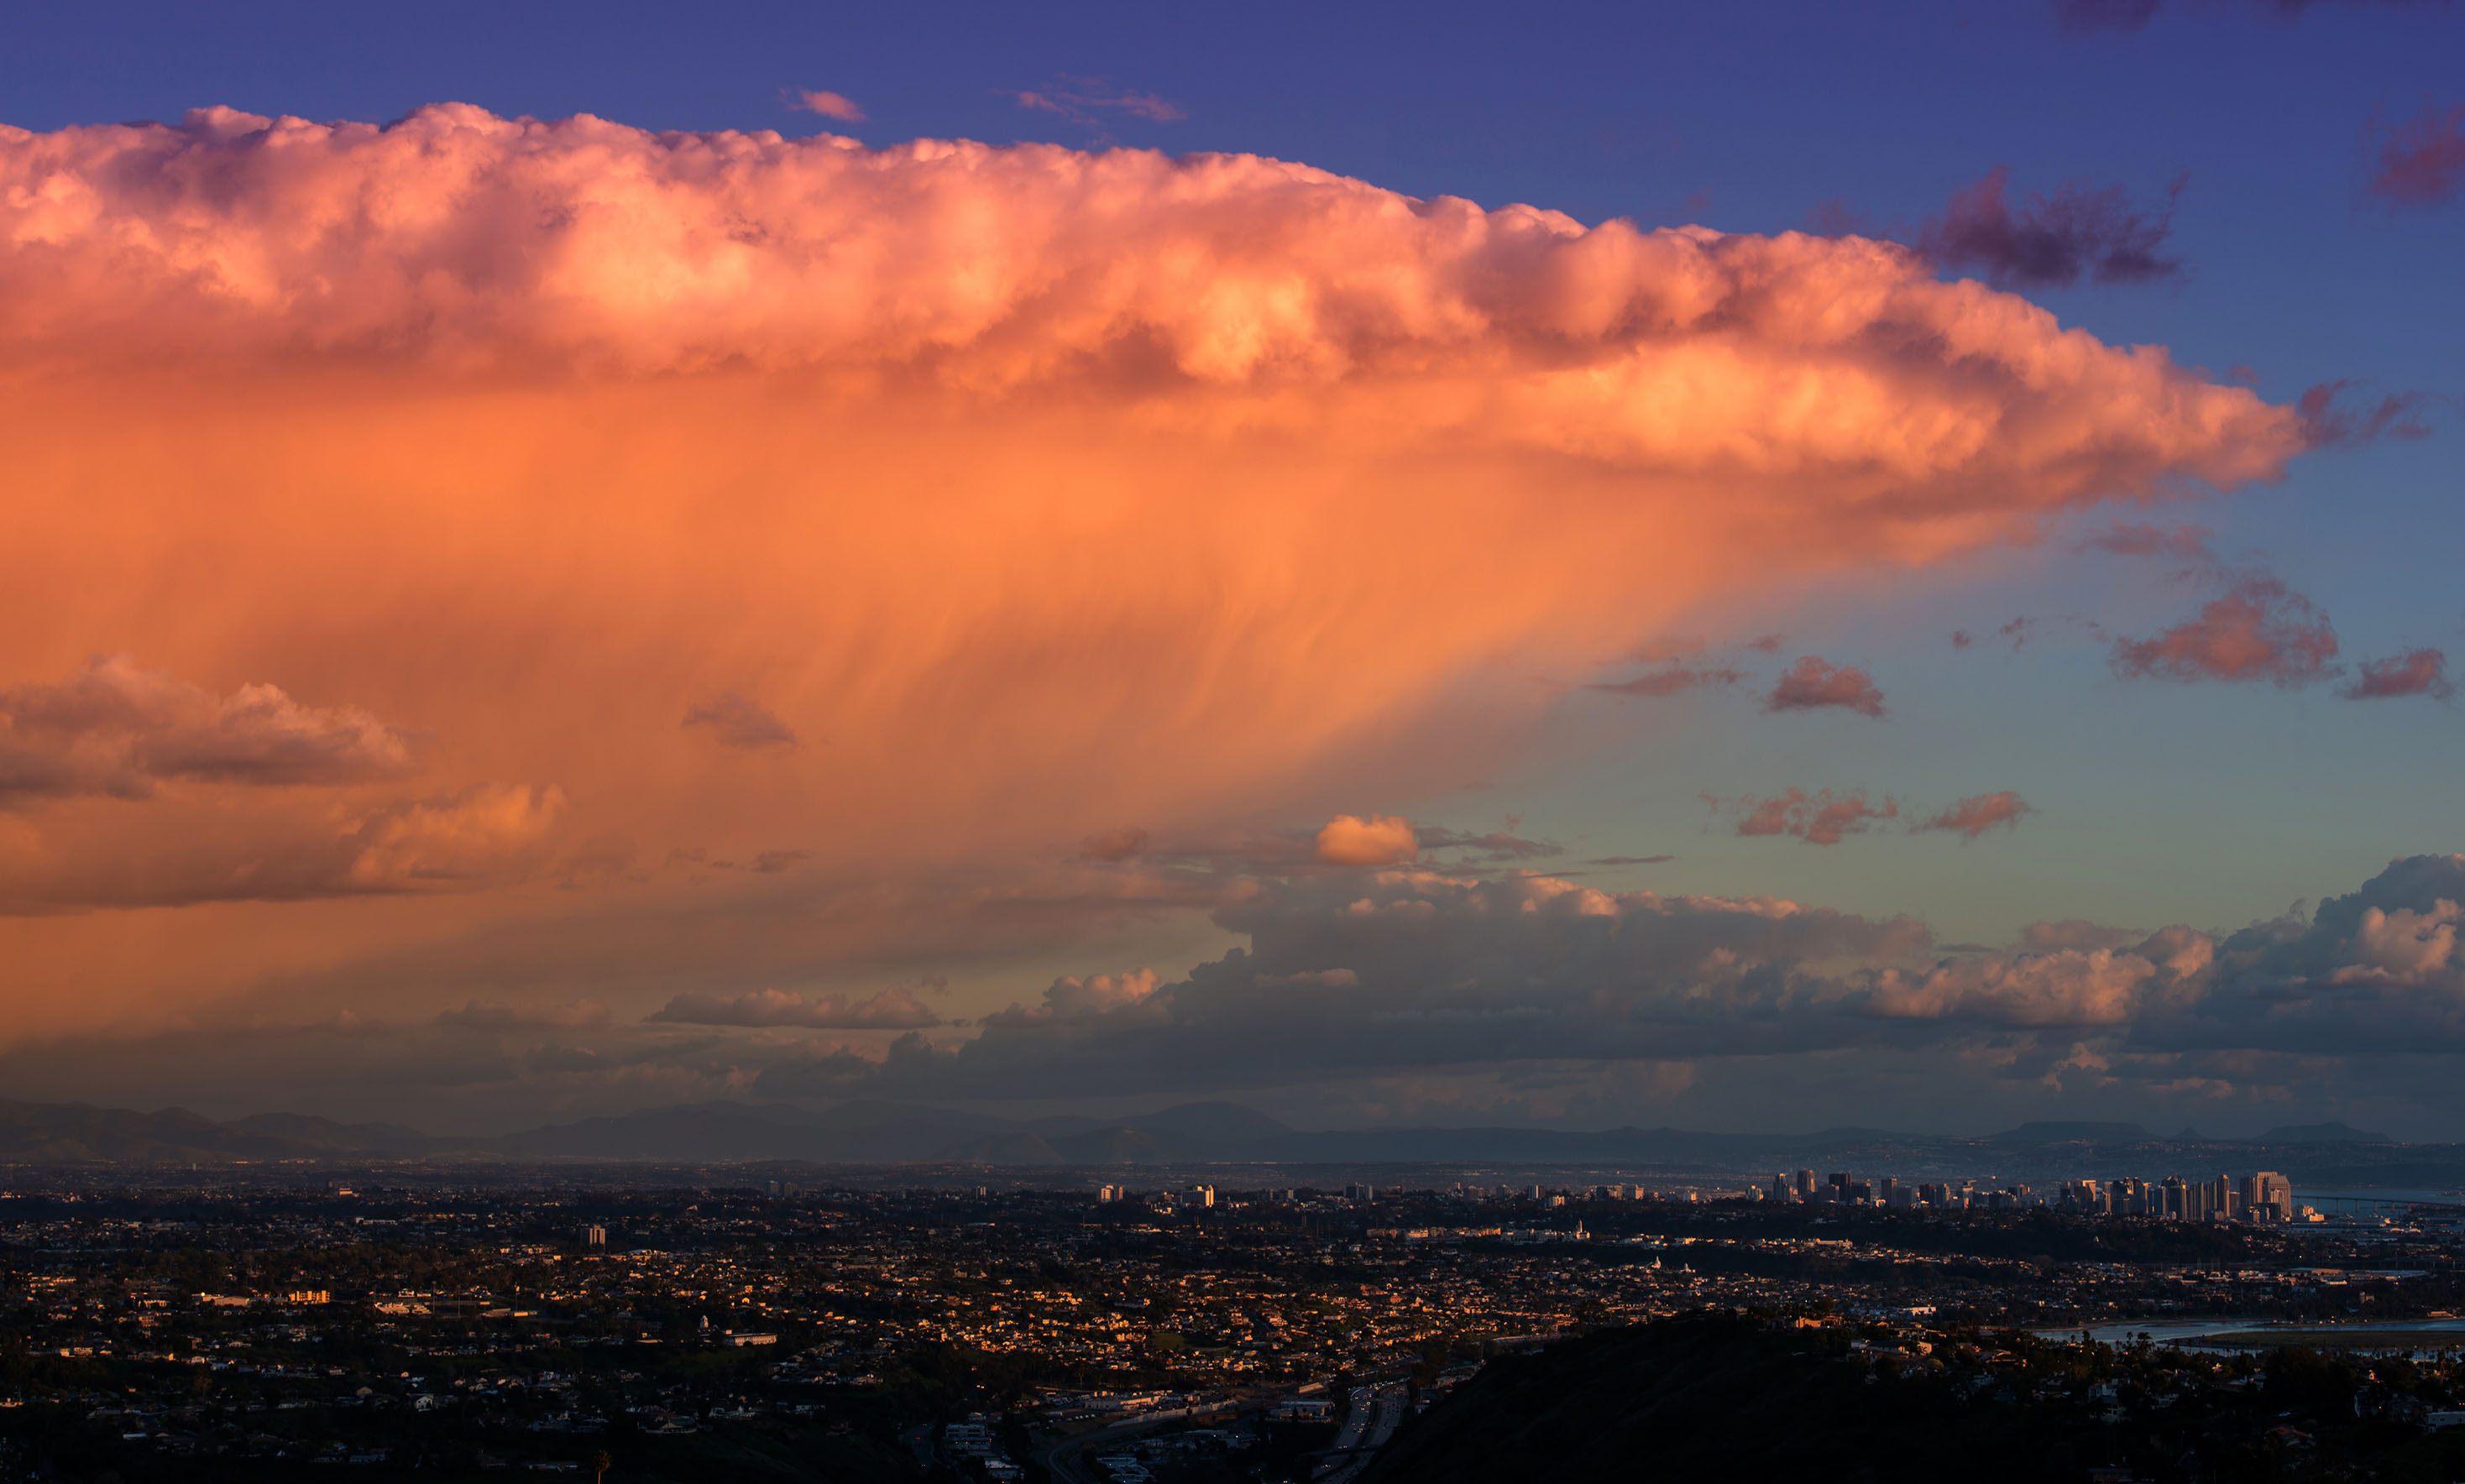 Sunset Cloud over San Diego by John Zhu